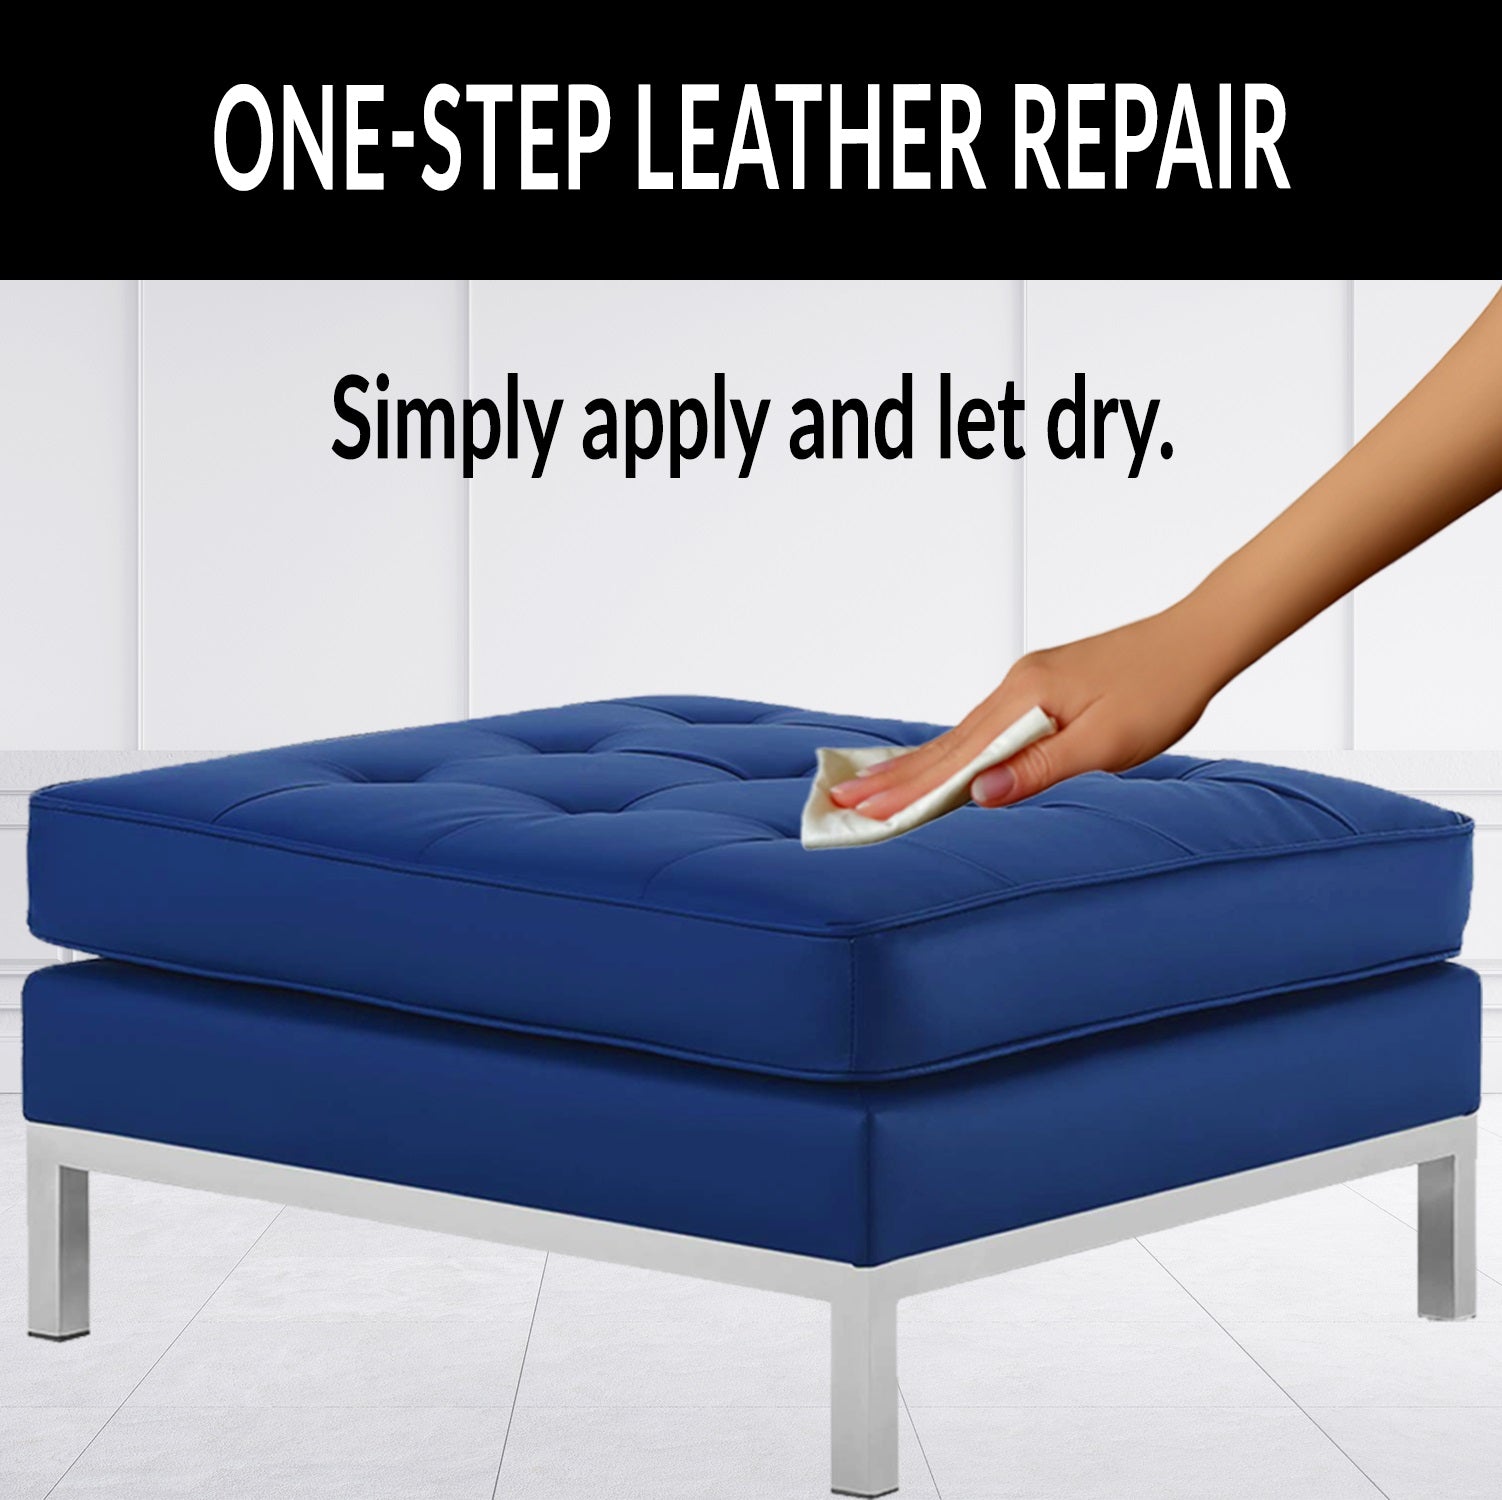 LeatherNu Complete Leather Color Restoration & Repair Kit